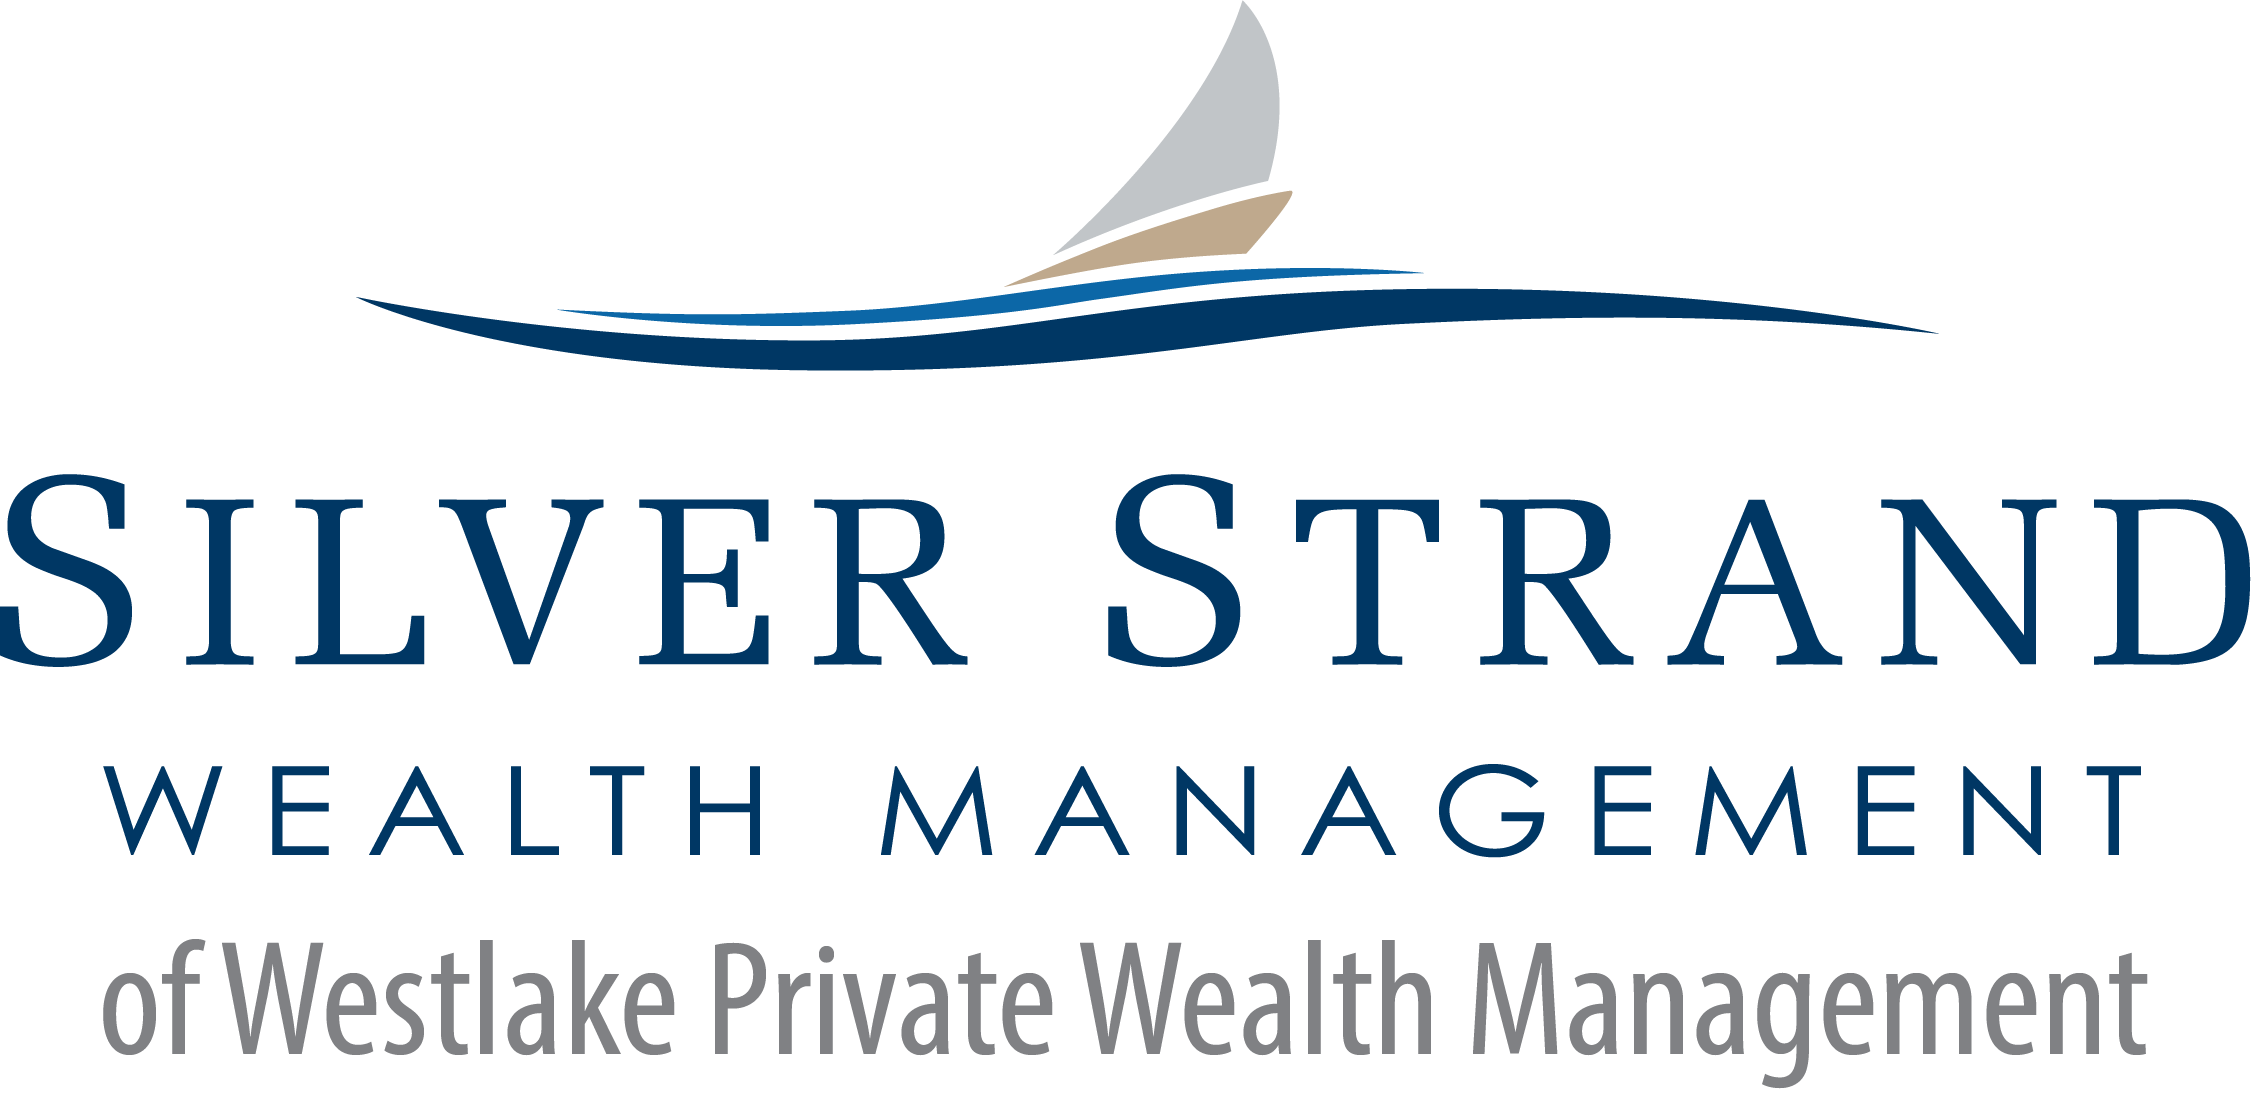 Silver Strand Wealth Management of Westlake Private Wealth Management